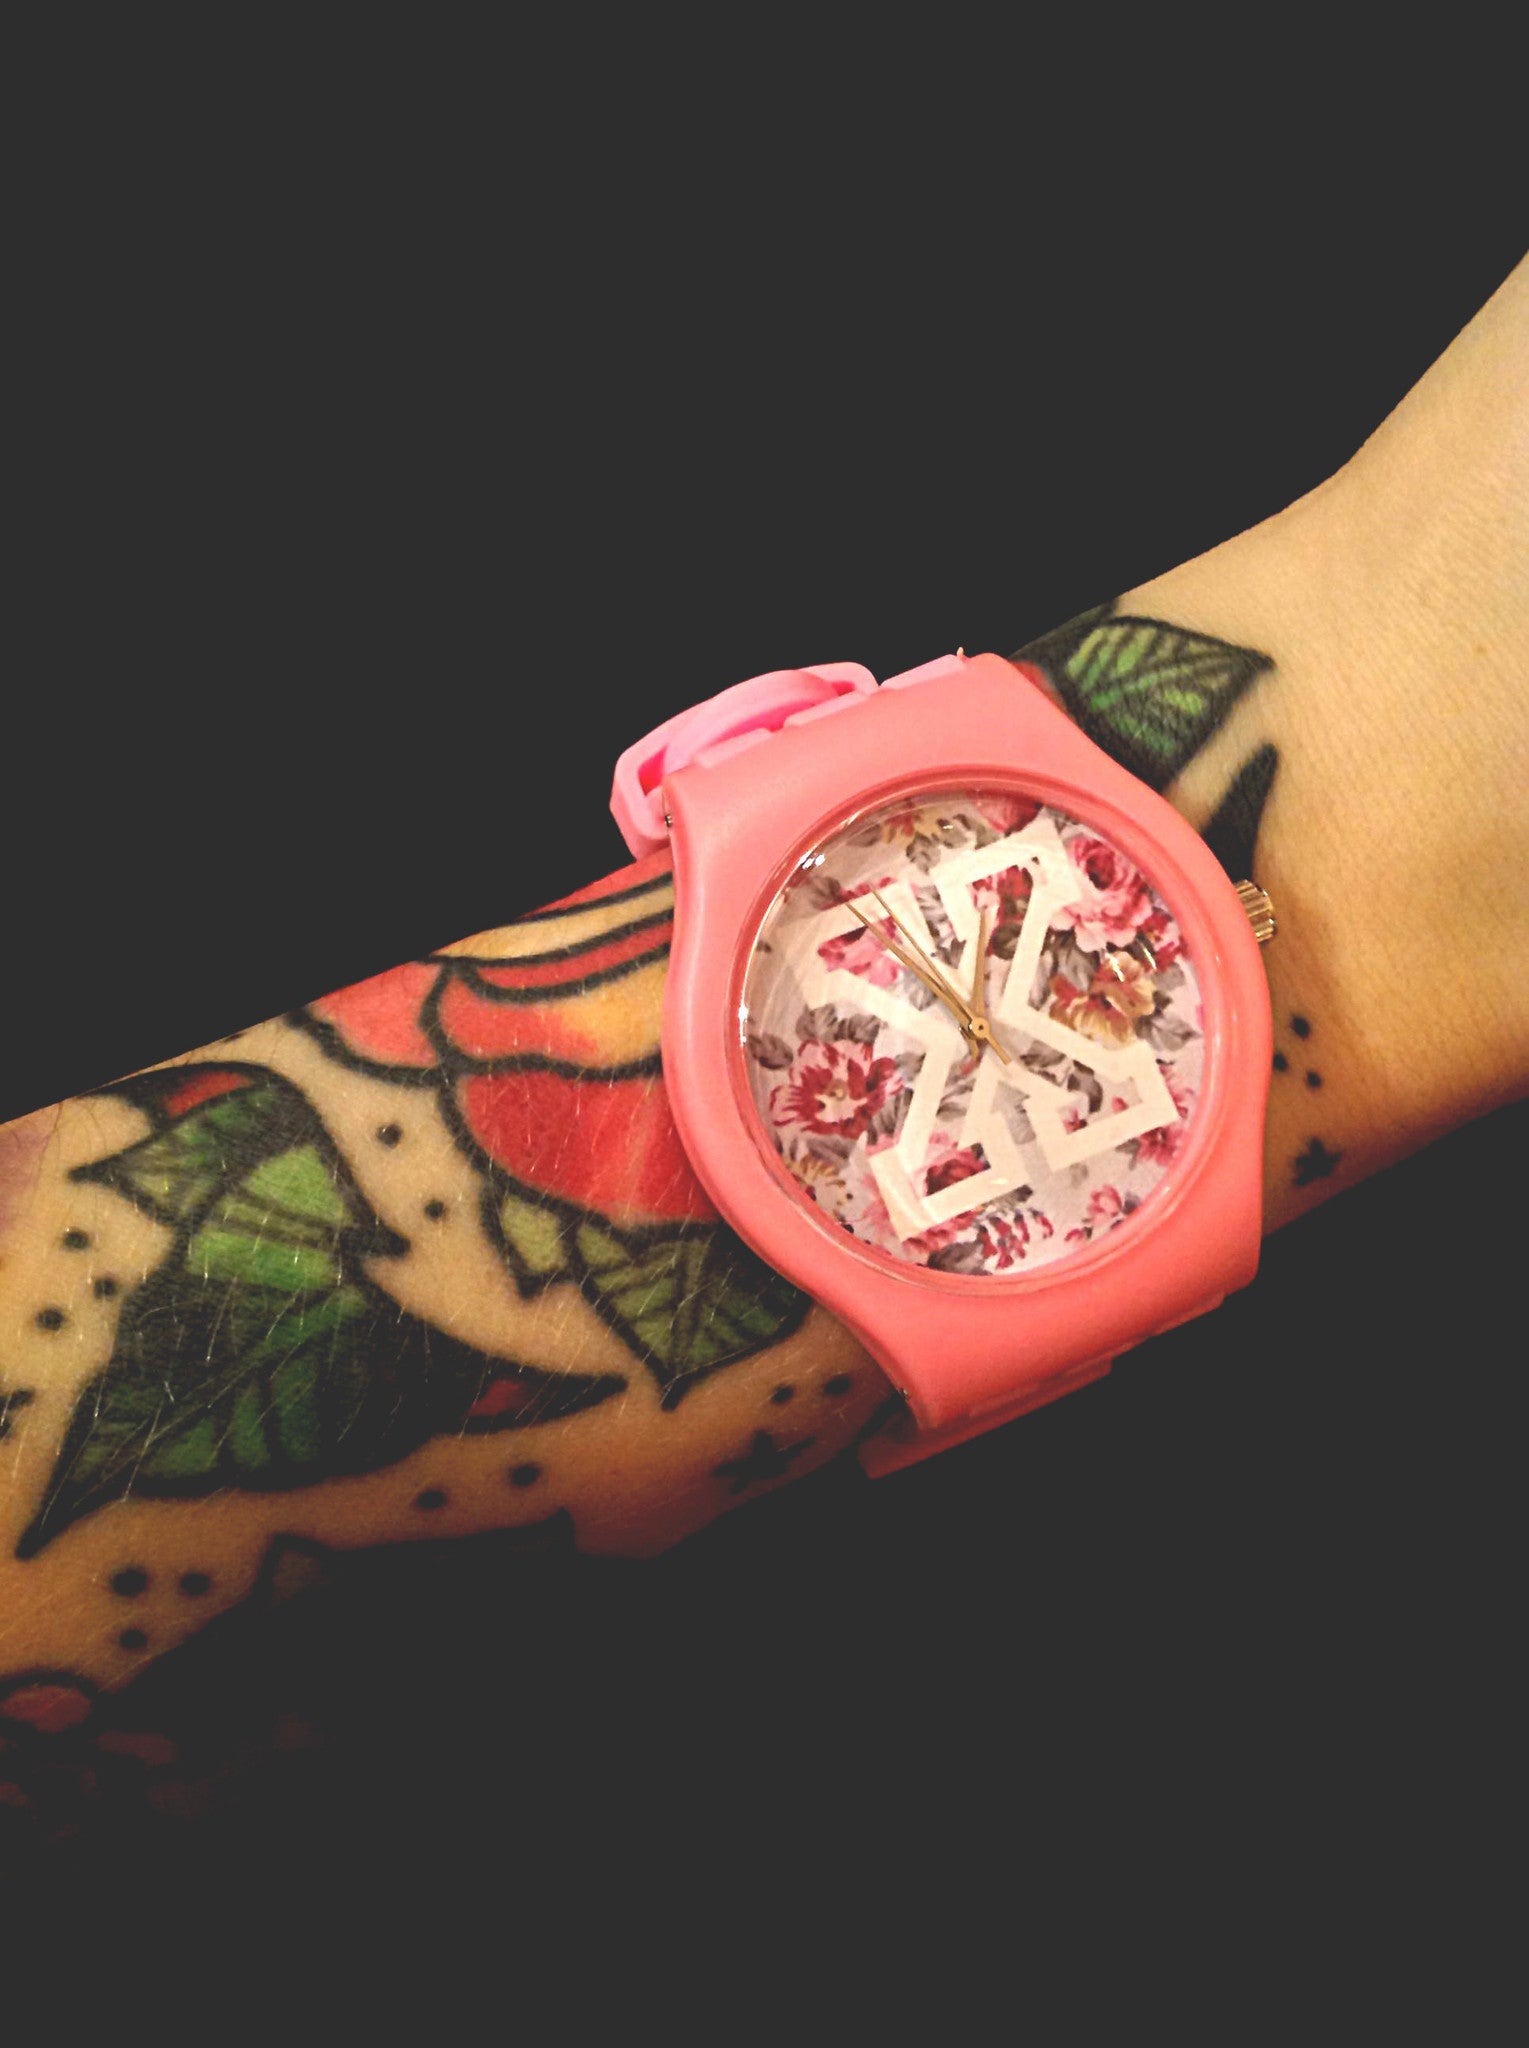 Pink straight edge watch